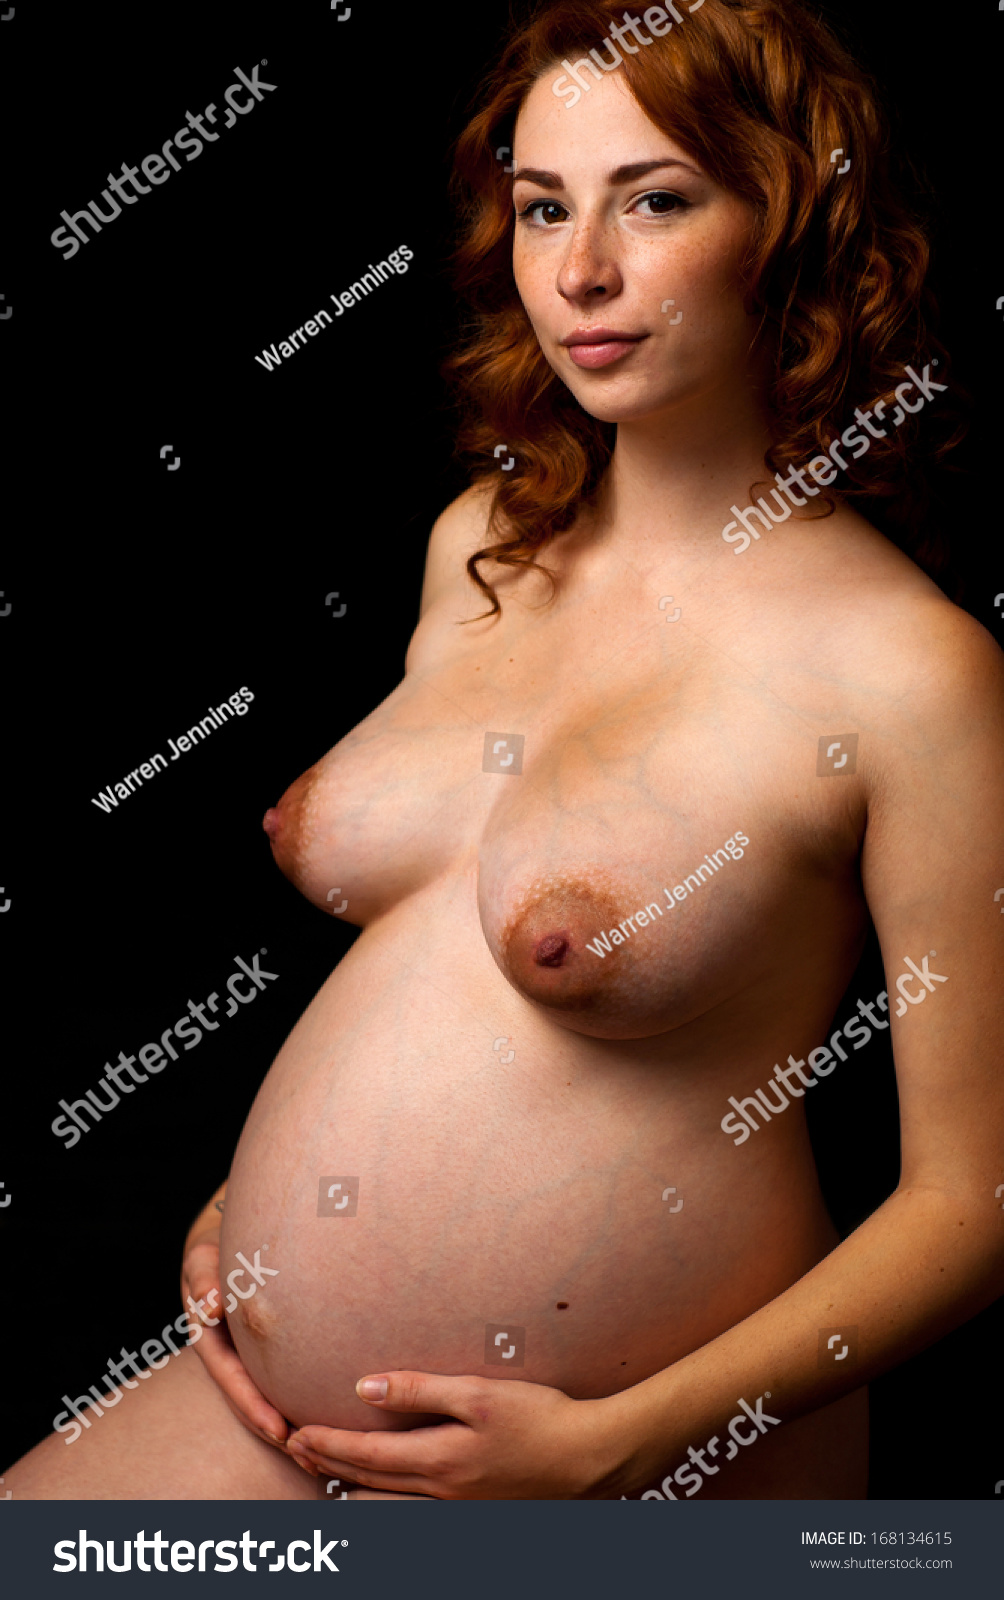 Pregnant Pics Nude 63